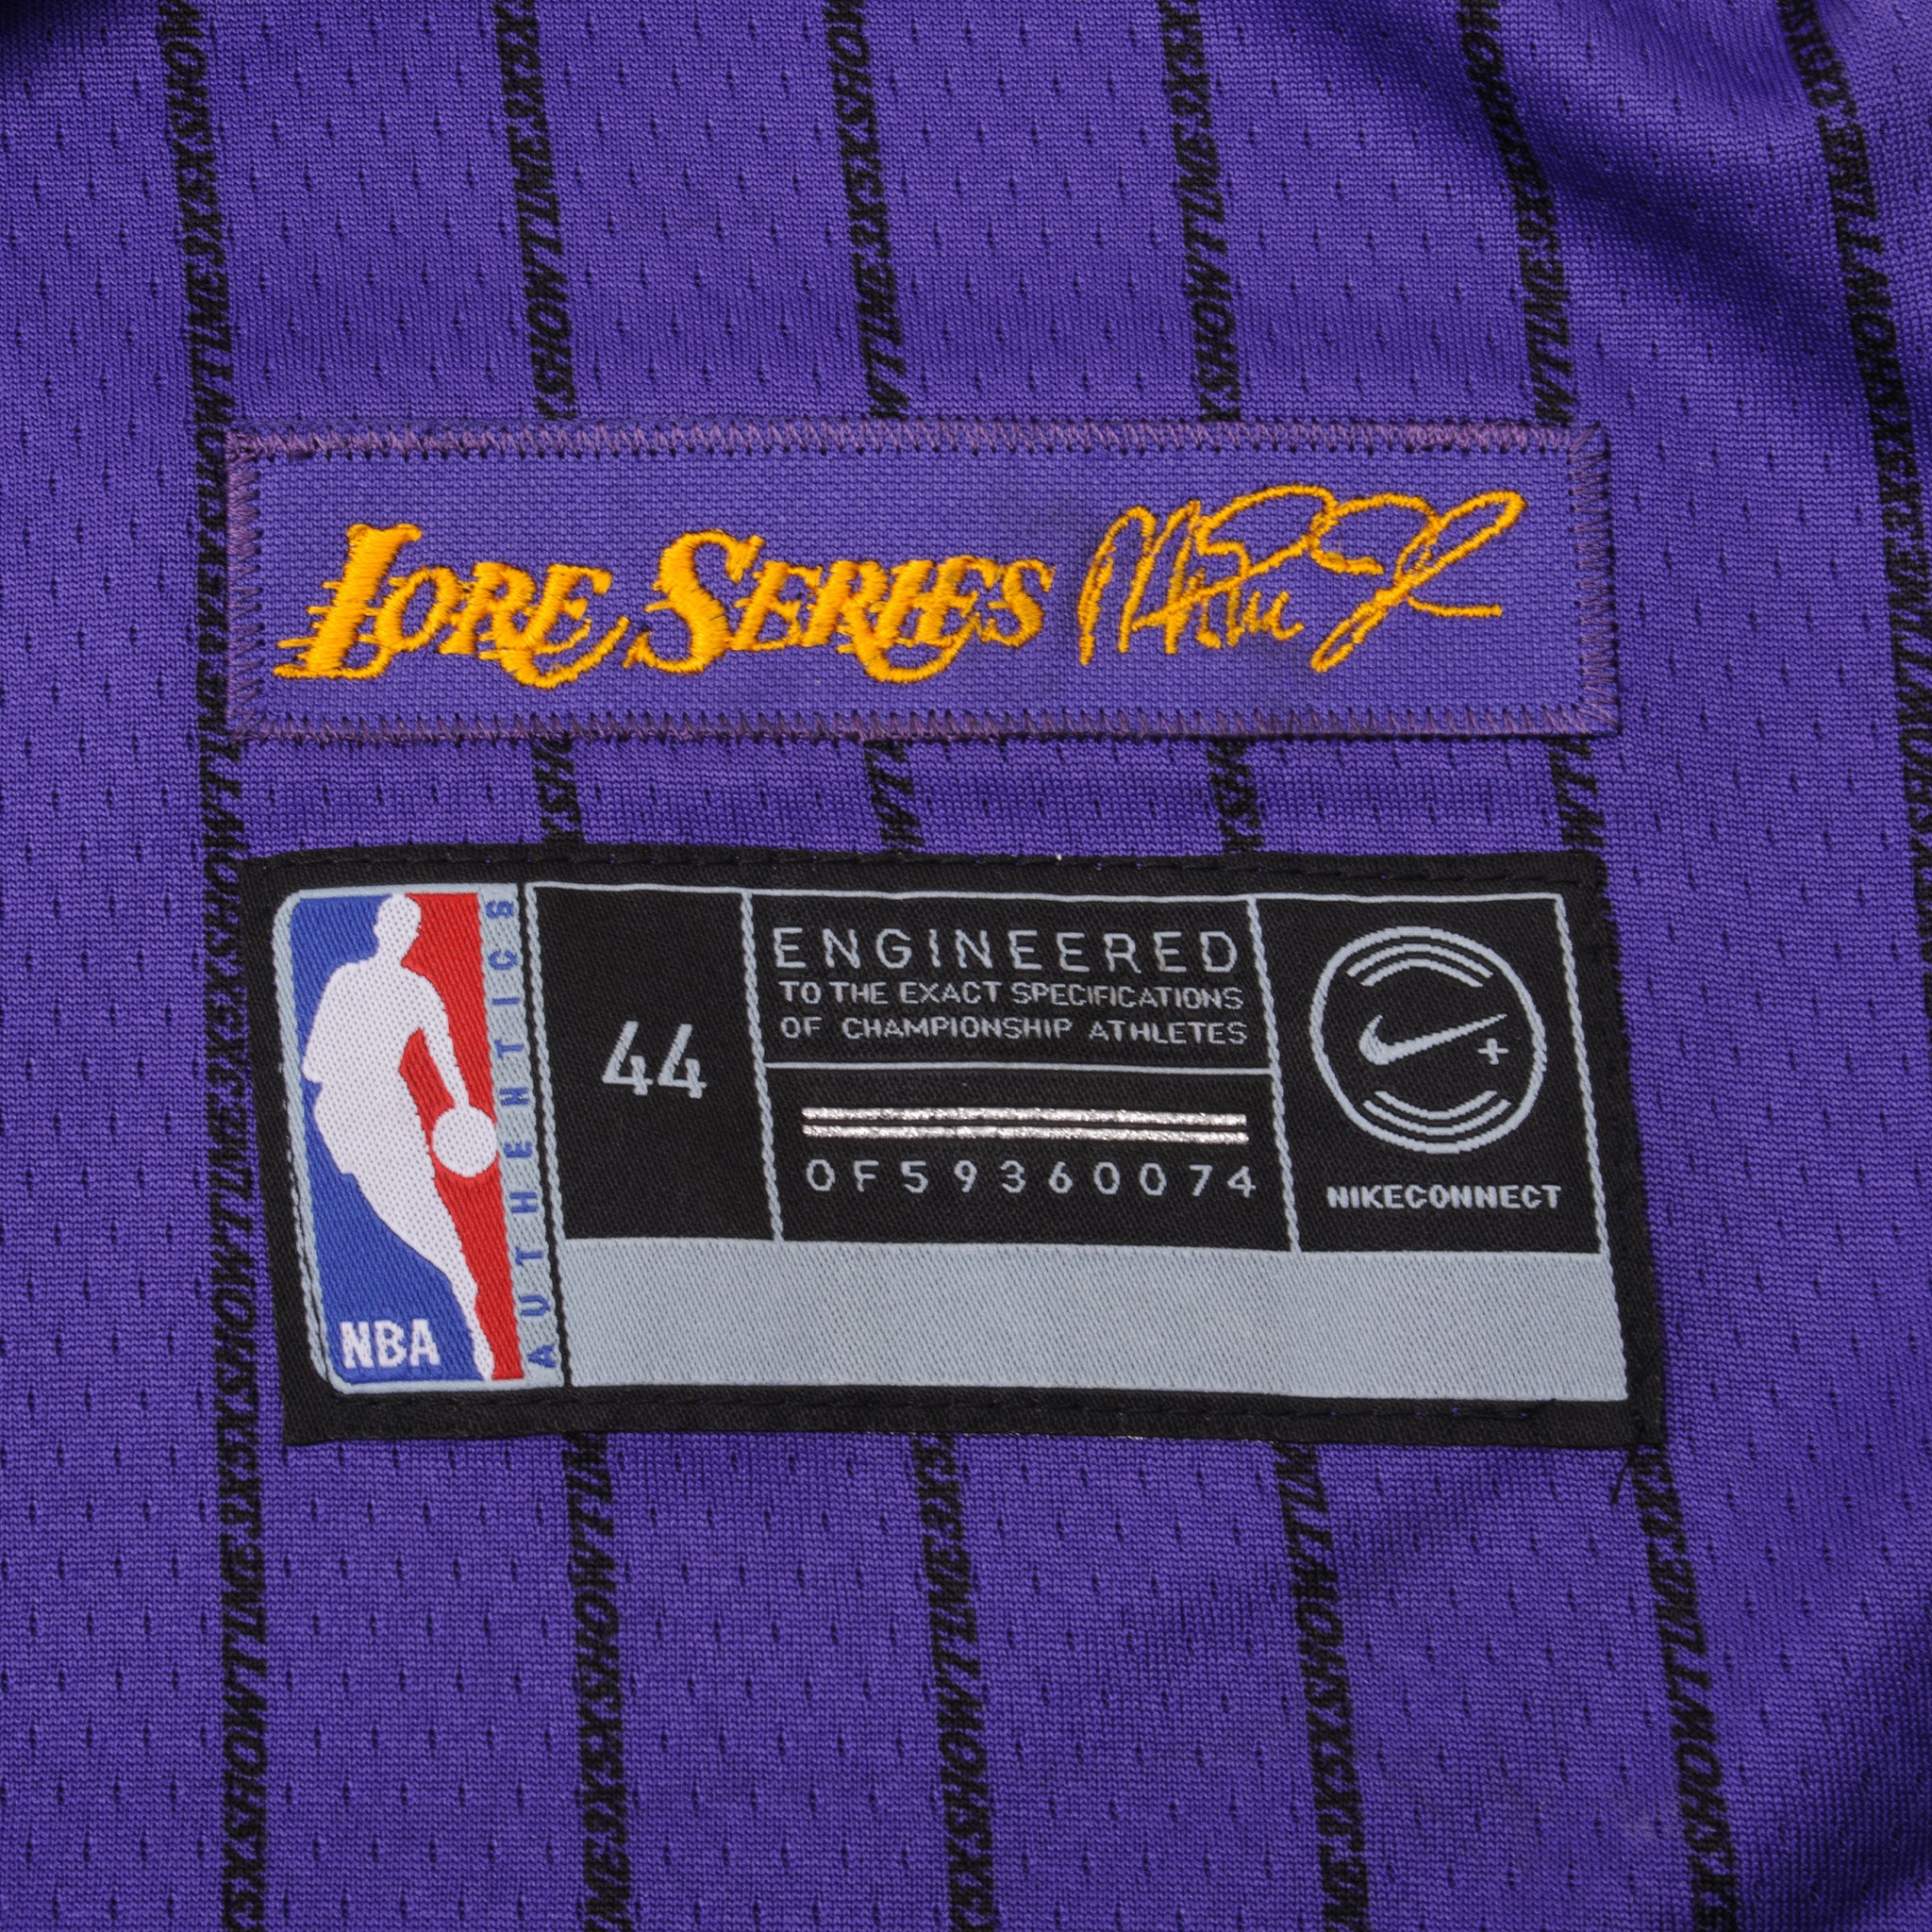 NIKE NBA LOS ANGELES LAKERS KOBE BRYANT #24 LORE SERIES JERSEY SIZE 44 –  Vintage rare usa